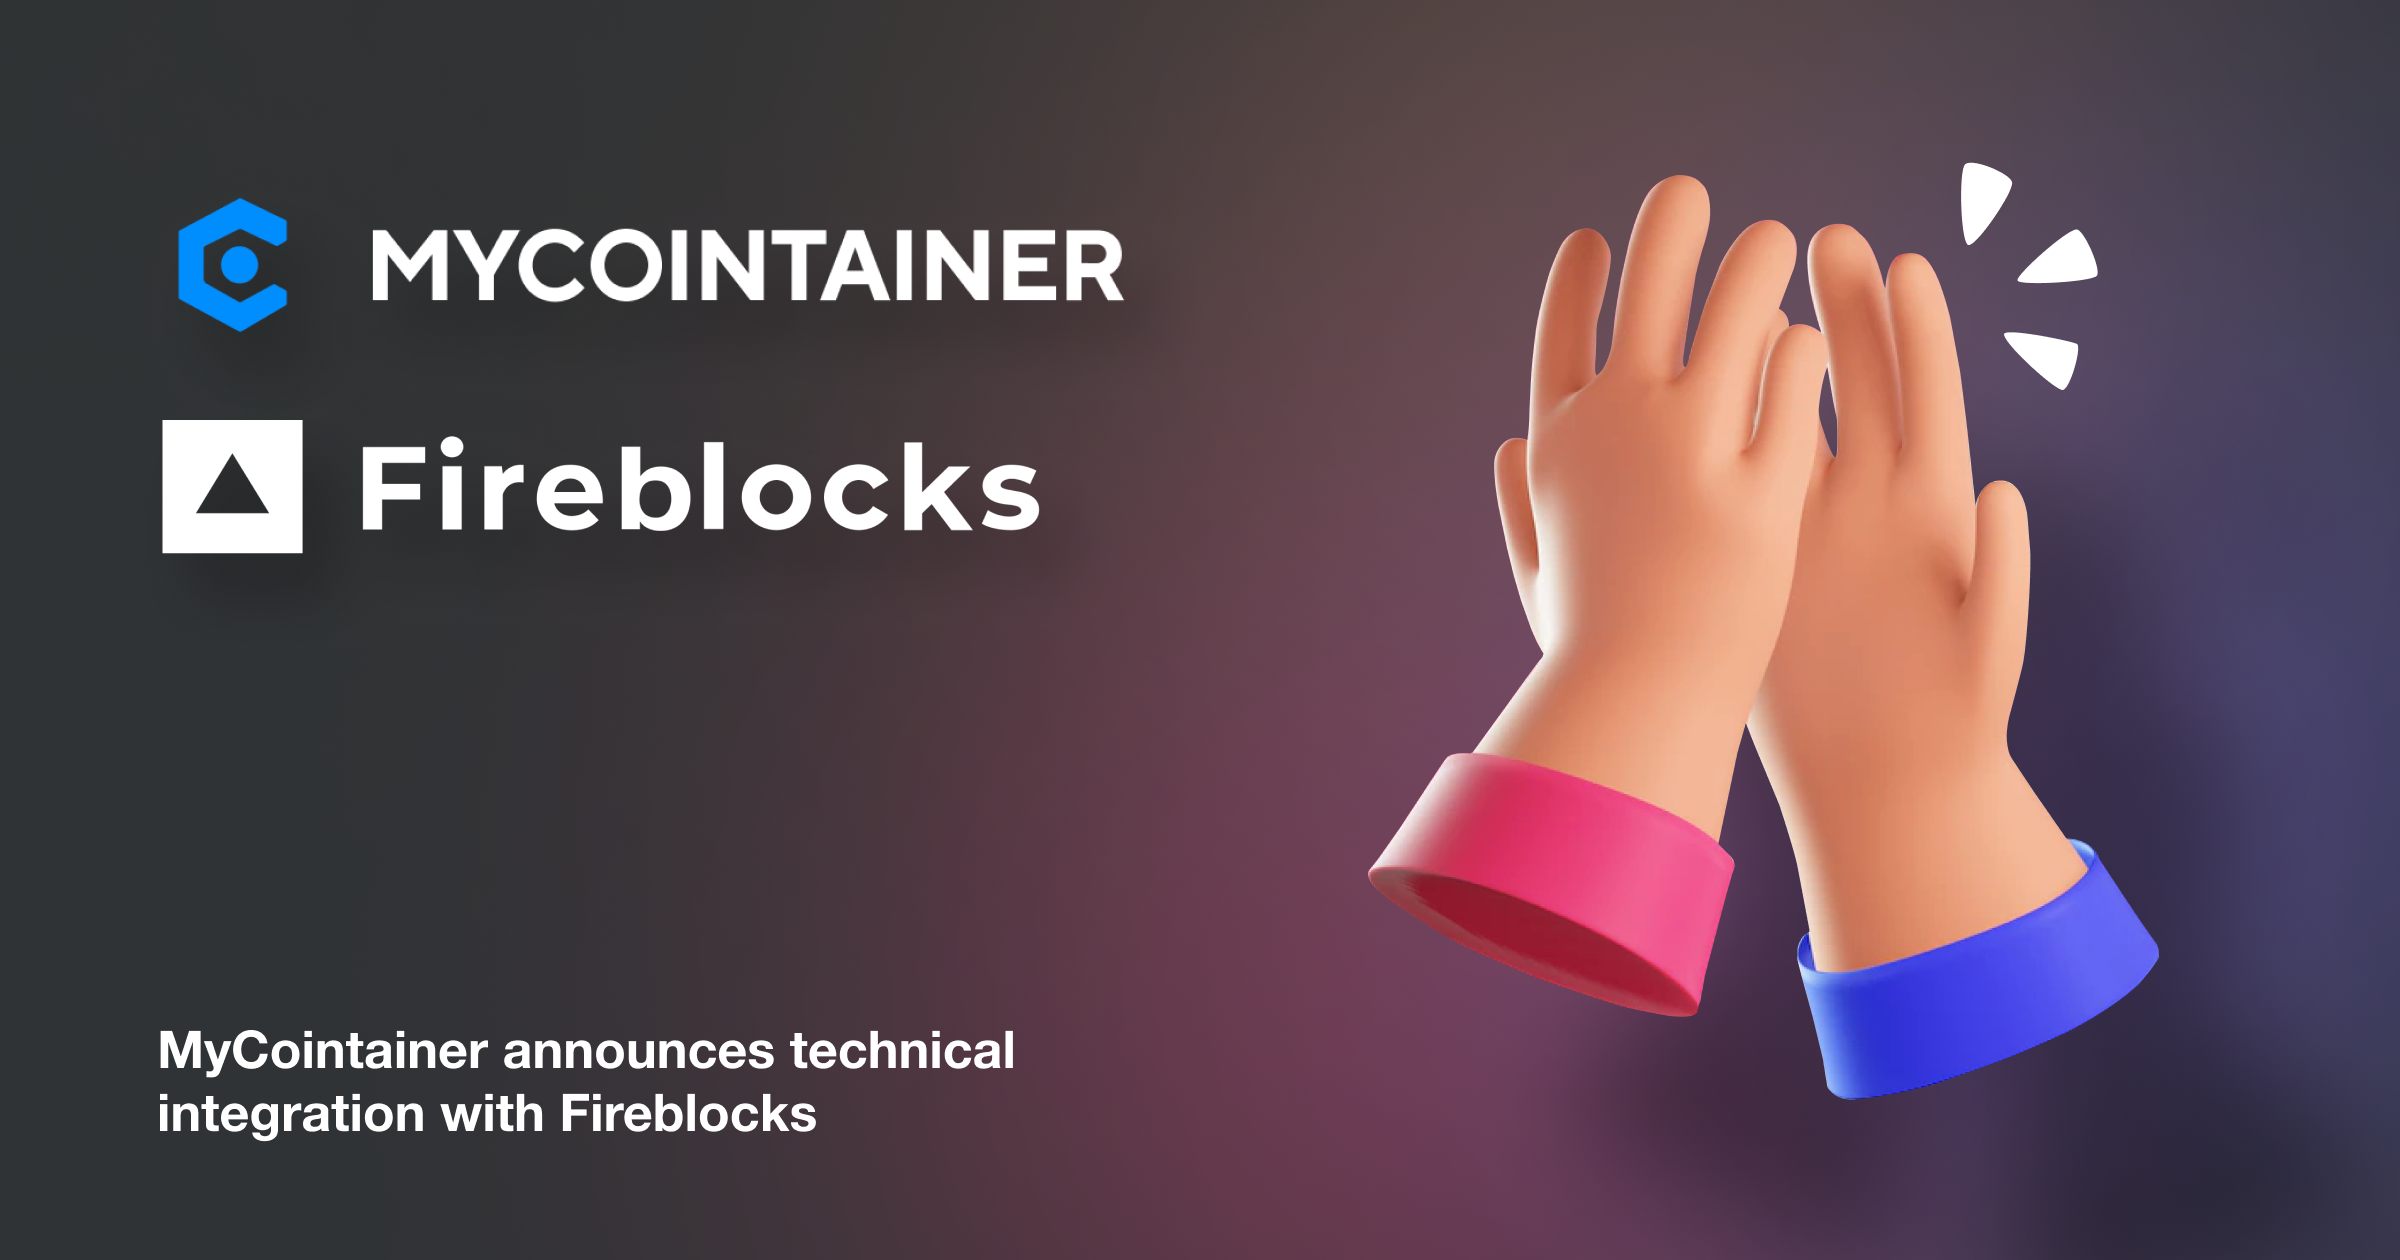 MyCointainer Announces Technical Integration with Fireblocks